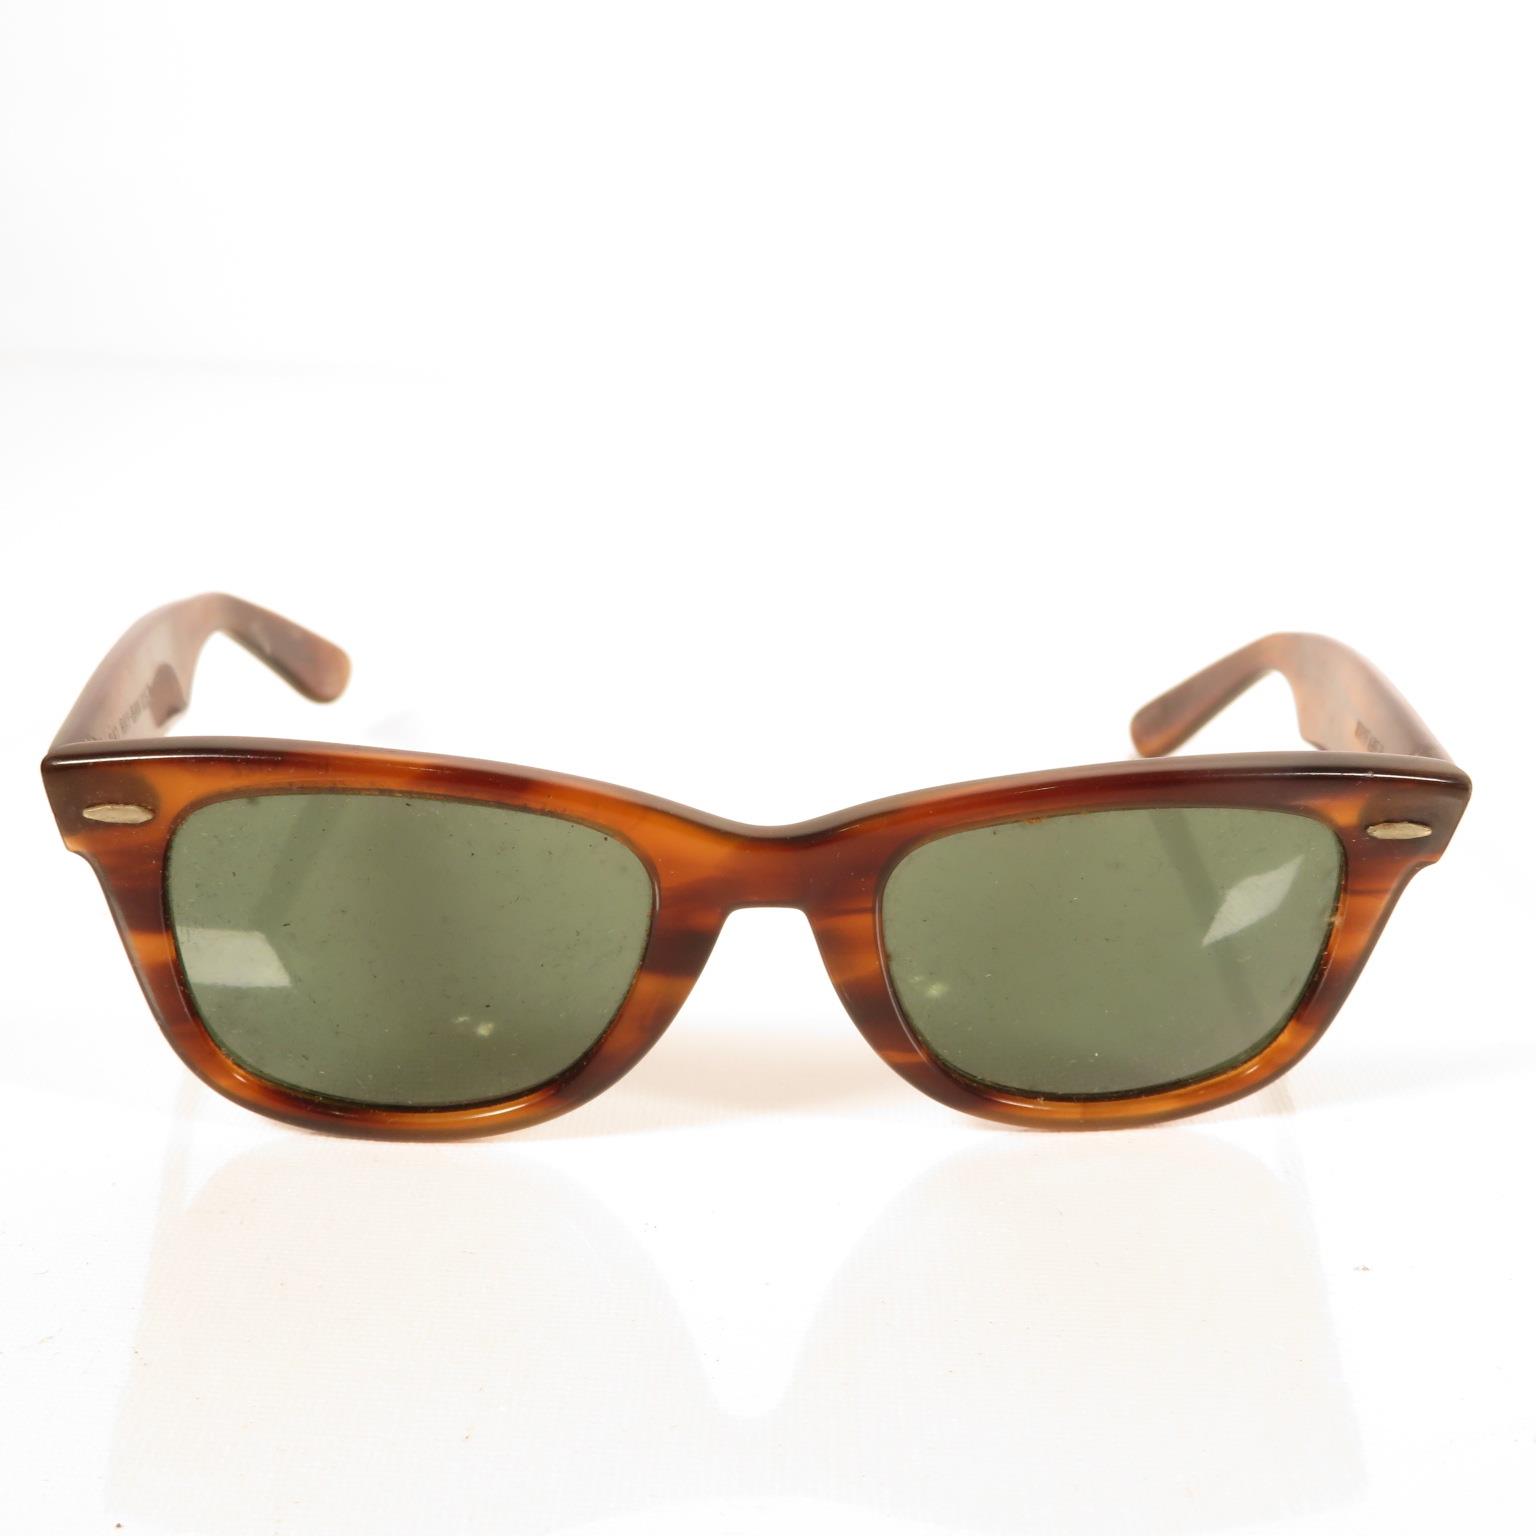 4x pairs Ray Ban sunglasses - - Image 14 of 22